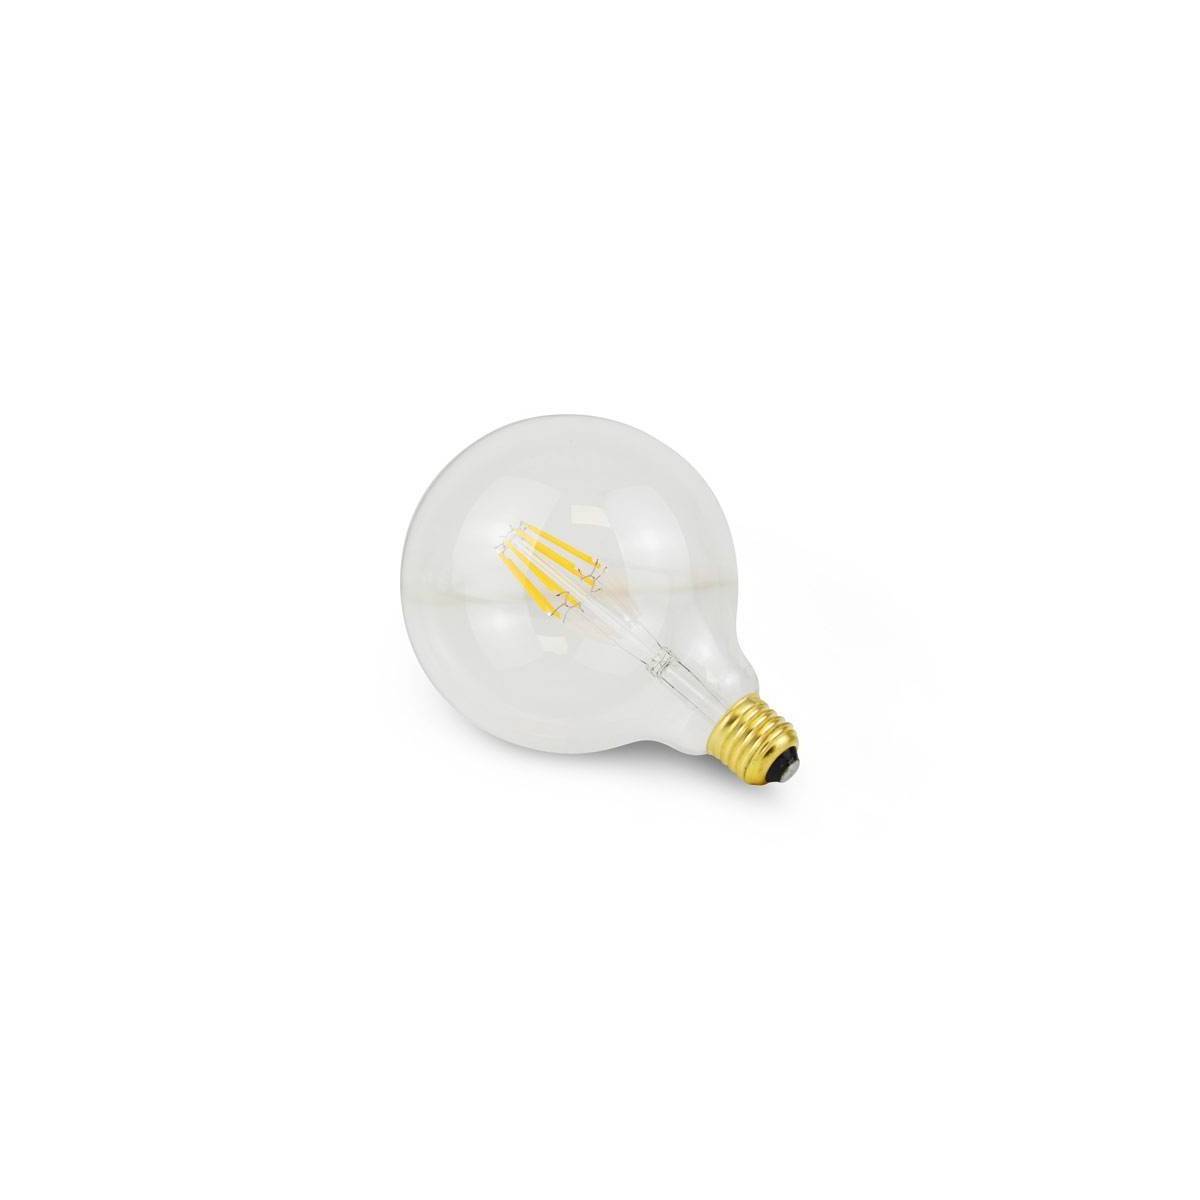 G125 Nordic Style LED Globe Bulb G125